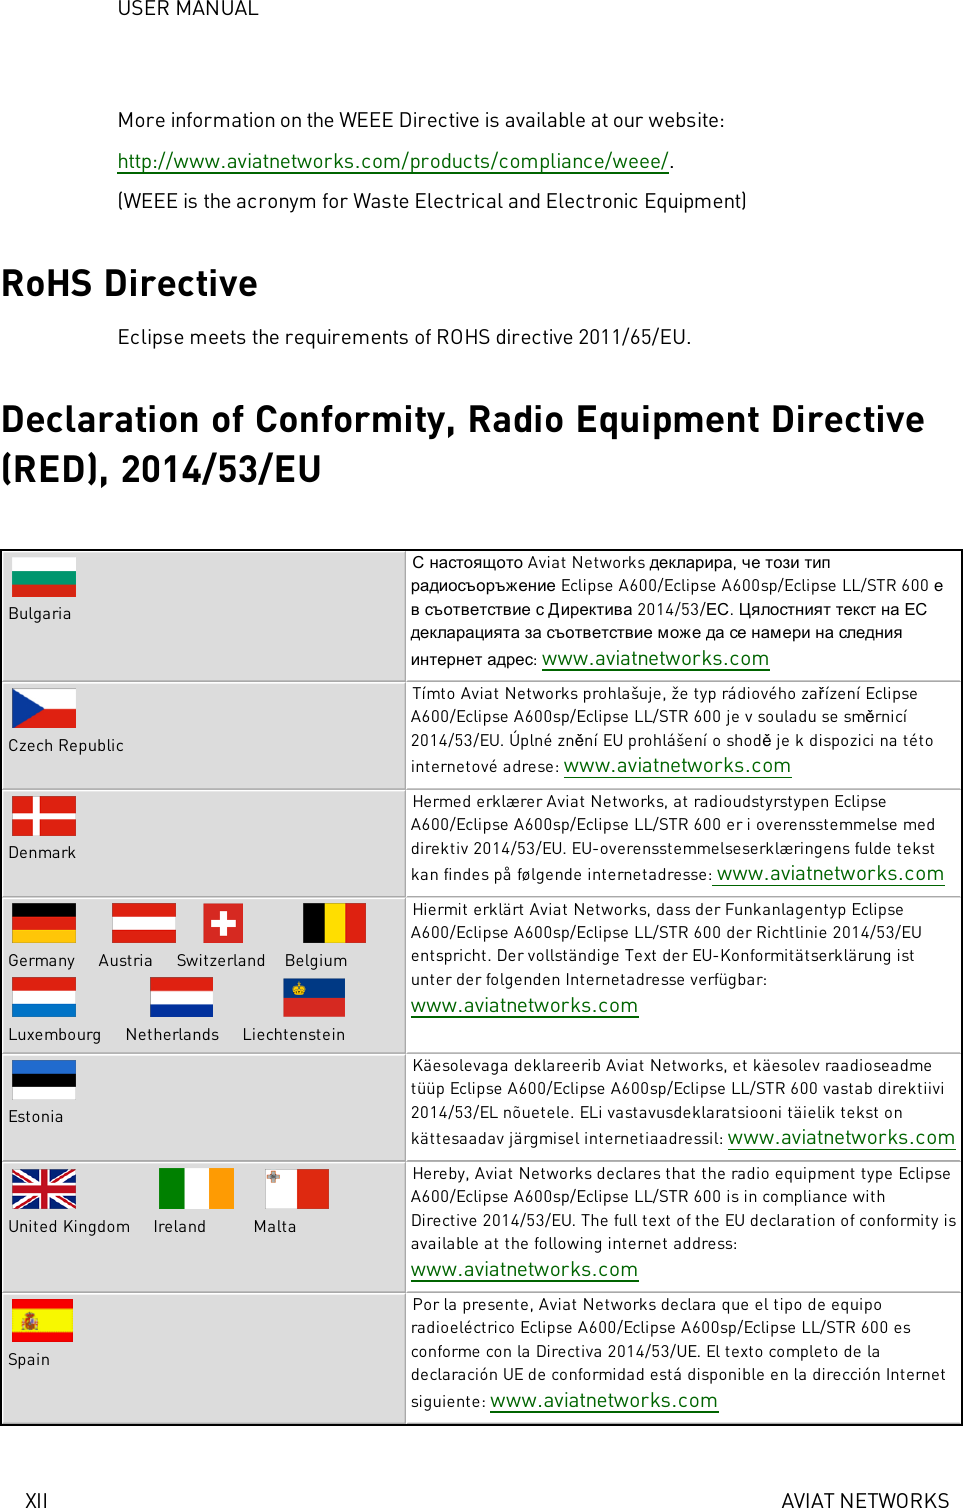 USER MANUALXII AVIAT NETWORKSMore information on the WEEE Directive is available at our website:http://www.aviatnetworks.com/products/compliance/weee/.(WEEE is the acronym for Waste Electrical and Electronic Equipment)RoHS DirectiveEclipse meets the requirements of ROHS directive 2011/65/EU.Declaration of Conformity, Radio Equipment Directive(RED), 2014/53/EUBulgariaС настоящото Aviat Networks декларира,че този типрадиосъоръжение Eclipse A600/Eclipse A600sp/Eclipse LL/STR 600 ев съответствие с Директива 2014/53/ЕС.Цялостният текст на ЕСдекларацията за съответствие може да се намери на следнияинтернет адрес:www.aviatnetworks.comCzech RepublicTímto Aviat Networks prohlašuje, že typ rádiového zařízení EclipseA600/Eclipse A600sp/Eclipse LL/STR 600 je v souladu se směrnicí2014/53/EU. Úplné znění EU prohlášení o shoděje k dispozici na tétointernetové adrese: www.aviatnetworks.comDenmarkHermed erklærer Aviat Networks, at radioudstyrstypen EclipseA600/Eclipse A600sp/Eclipse LL/STR 600 er i overensstemmelse meddirektiv 2014/53/EU. EU-overensstemmelseserklæringens fulde tekstkan findes på følgende internetadresse: www.aviatnetworks.comGermany Austria Switzerland BelgiumLuxembourg Netherlands LiechtensteinHiermit erklärt Aviat Networks, dass der Funkanlagentyp EclipseA600/Eclipse A600sp/Eclipse LL/STR 600 der Richtlinie 2014/53/EUentspricht. Der vollständige Text der EU-Konformitätserklärung istunter der folgenden Internetadresse verfügbar:www.aviatnetworks.comEstoniaKäesolevaga deklareerib Aviat Networks, et käesolev raadioseadmetüüp Eclipse A600/Eclipse A600sp/Eclipse LL/STR 600 vastab direktiivi2014/53/EL nõuetele. ELi vastavusdeklaratsiooni täielik tekst onkättesaadav järgmisel internetiaadressil: www.aviatnetworks.comUnited Kingdom Ireland MaltaHereby, Aviat Networks declares that the radio equipment type EclipseA600/Eclipse A600sp/Eclipse LL/STR 600 is in compliance withDirective 2014/53/EU. The full text of the EU declaration of conformity isavailable at the following internet address:www.aviatnetworks.comSpainPor la presente, Aviat Networks declara que el tipo de equiporadioeléctrico Eclipse A600/Eclipse A600sp/Eclipse LL/STR 600 esconforme con la Directiva 2014/53/UE. El texto completo de ladeclaración UE de conformidad está disponible en la dirección Internetsiguiente: www.aviatnetworks.com